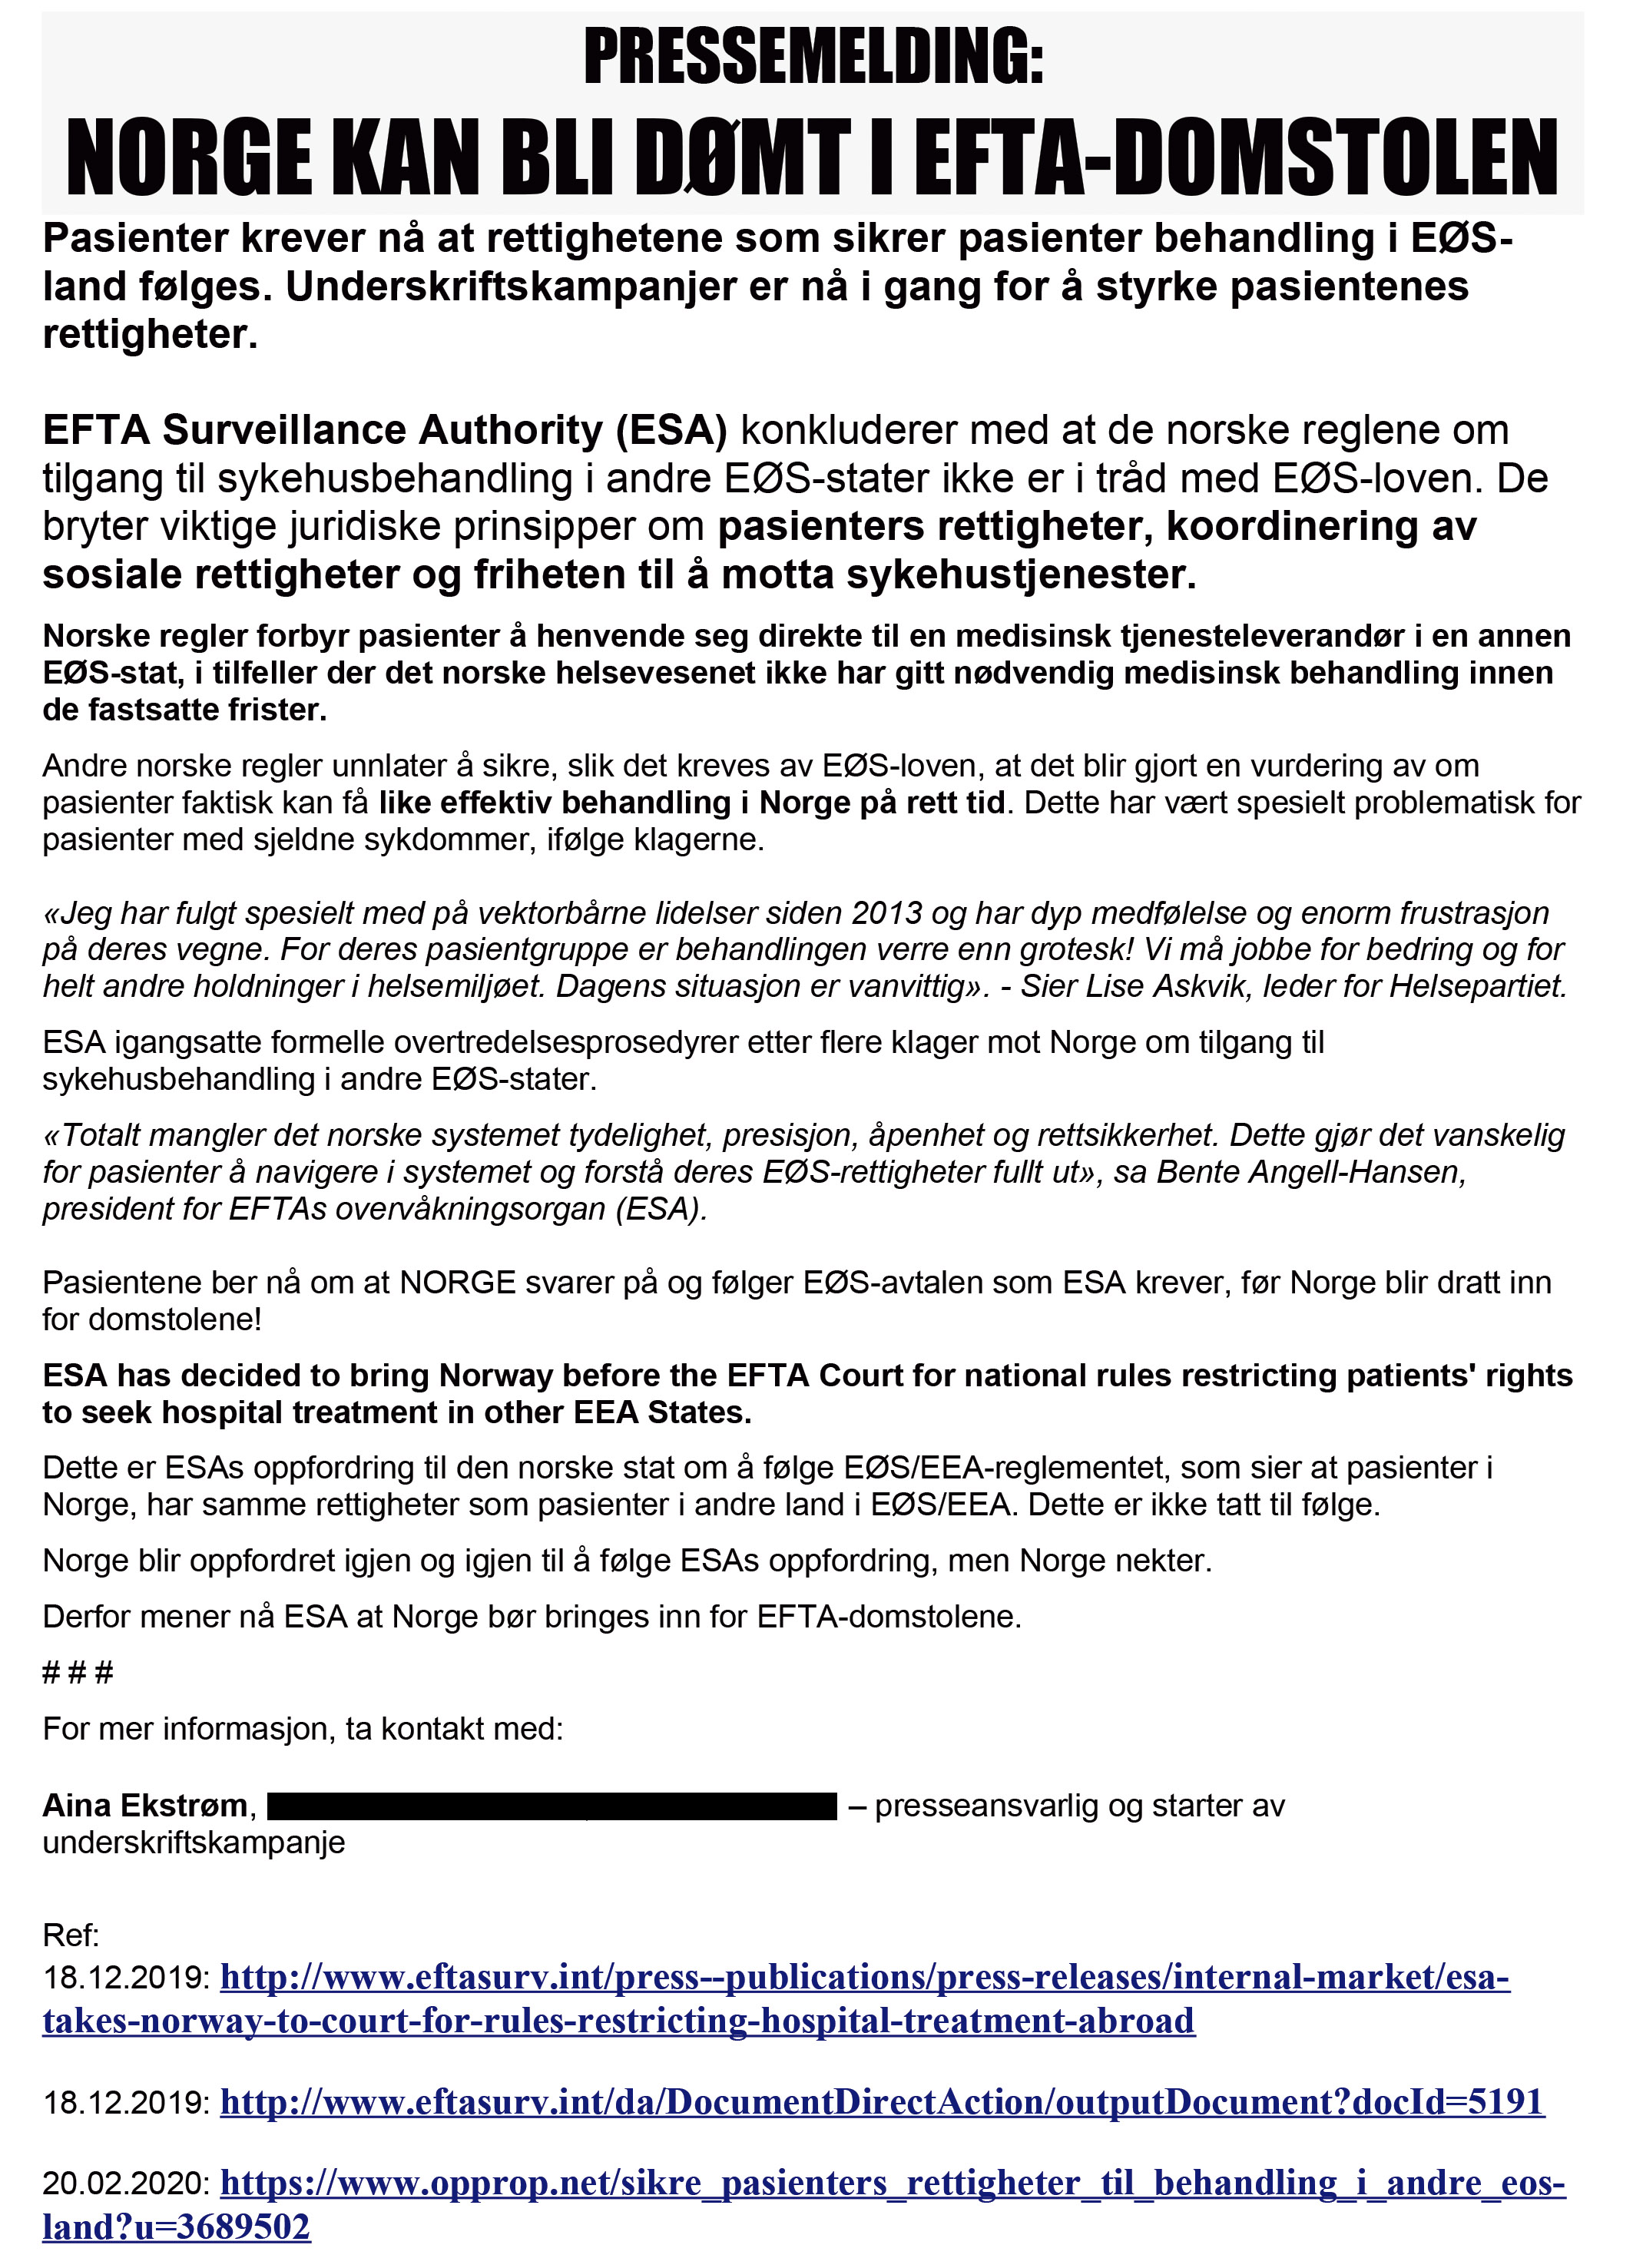 pressemelding_ESA_EFTA_domstolen1.jpg